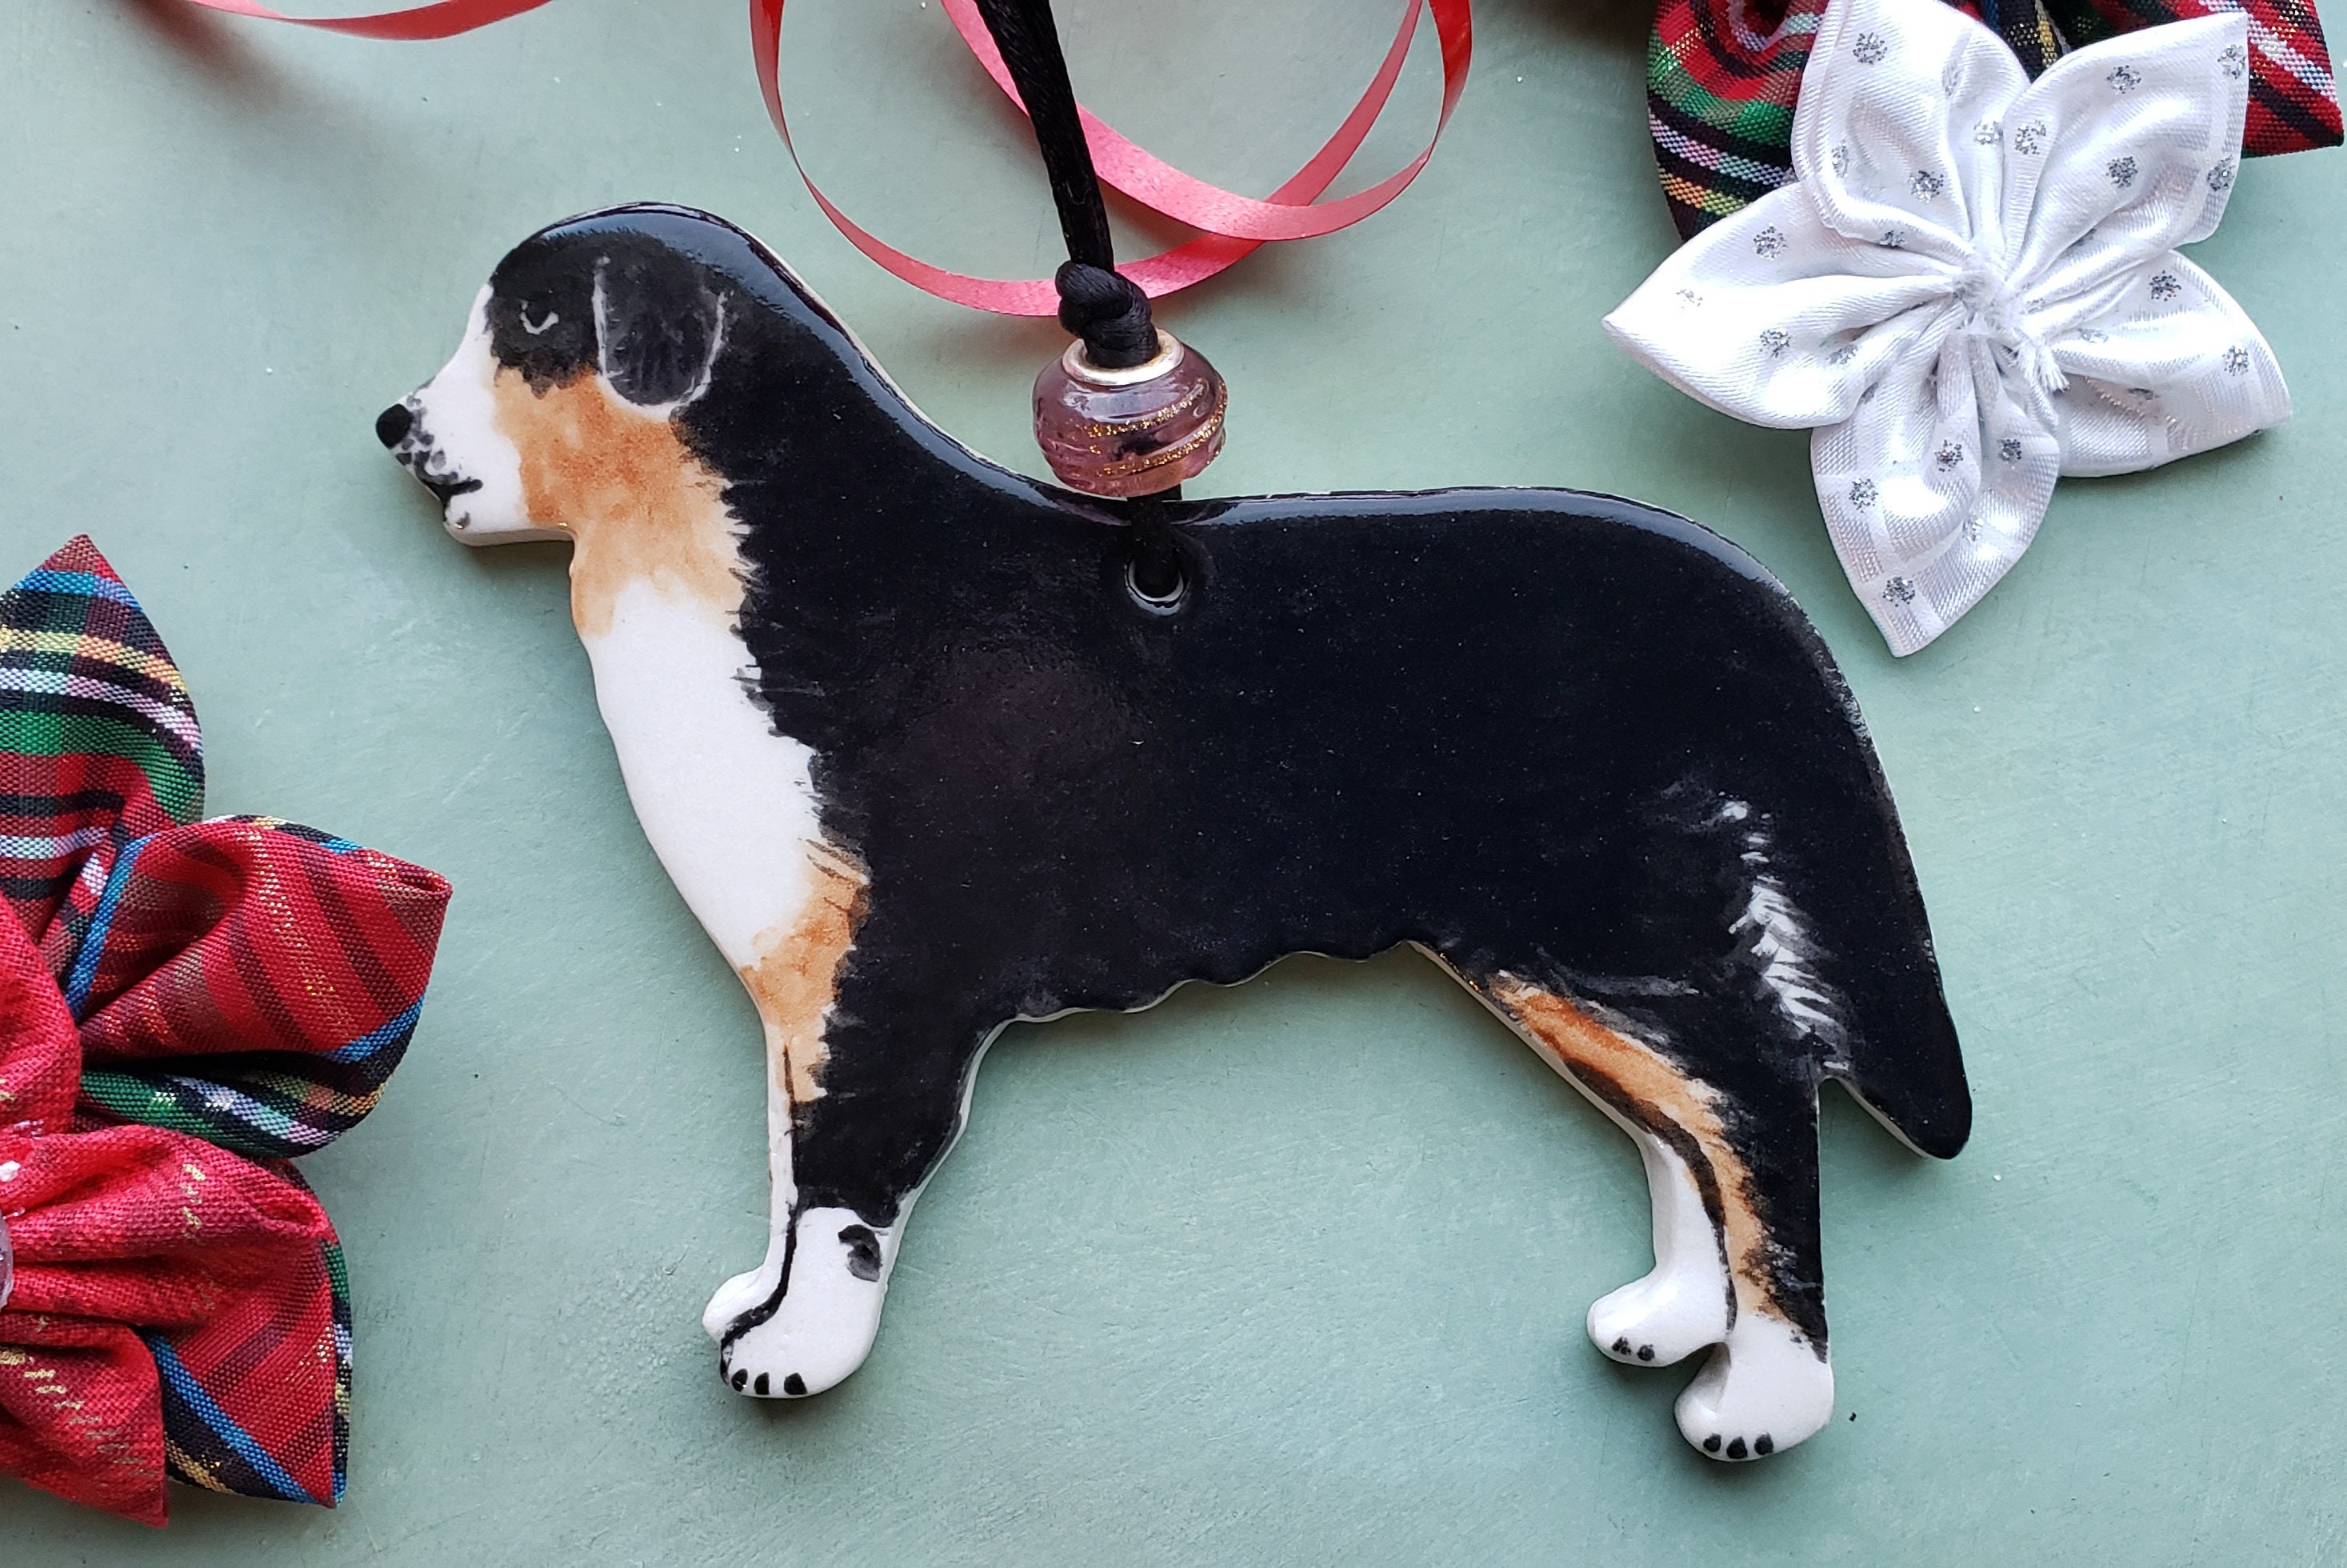 bernese mountain dog ornament